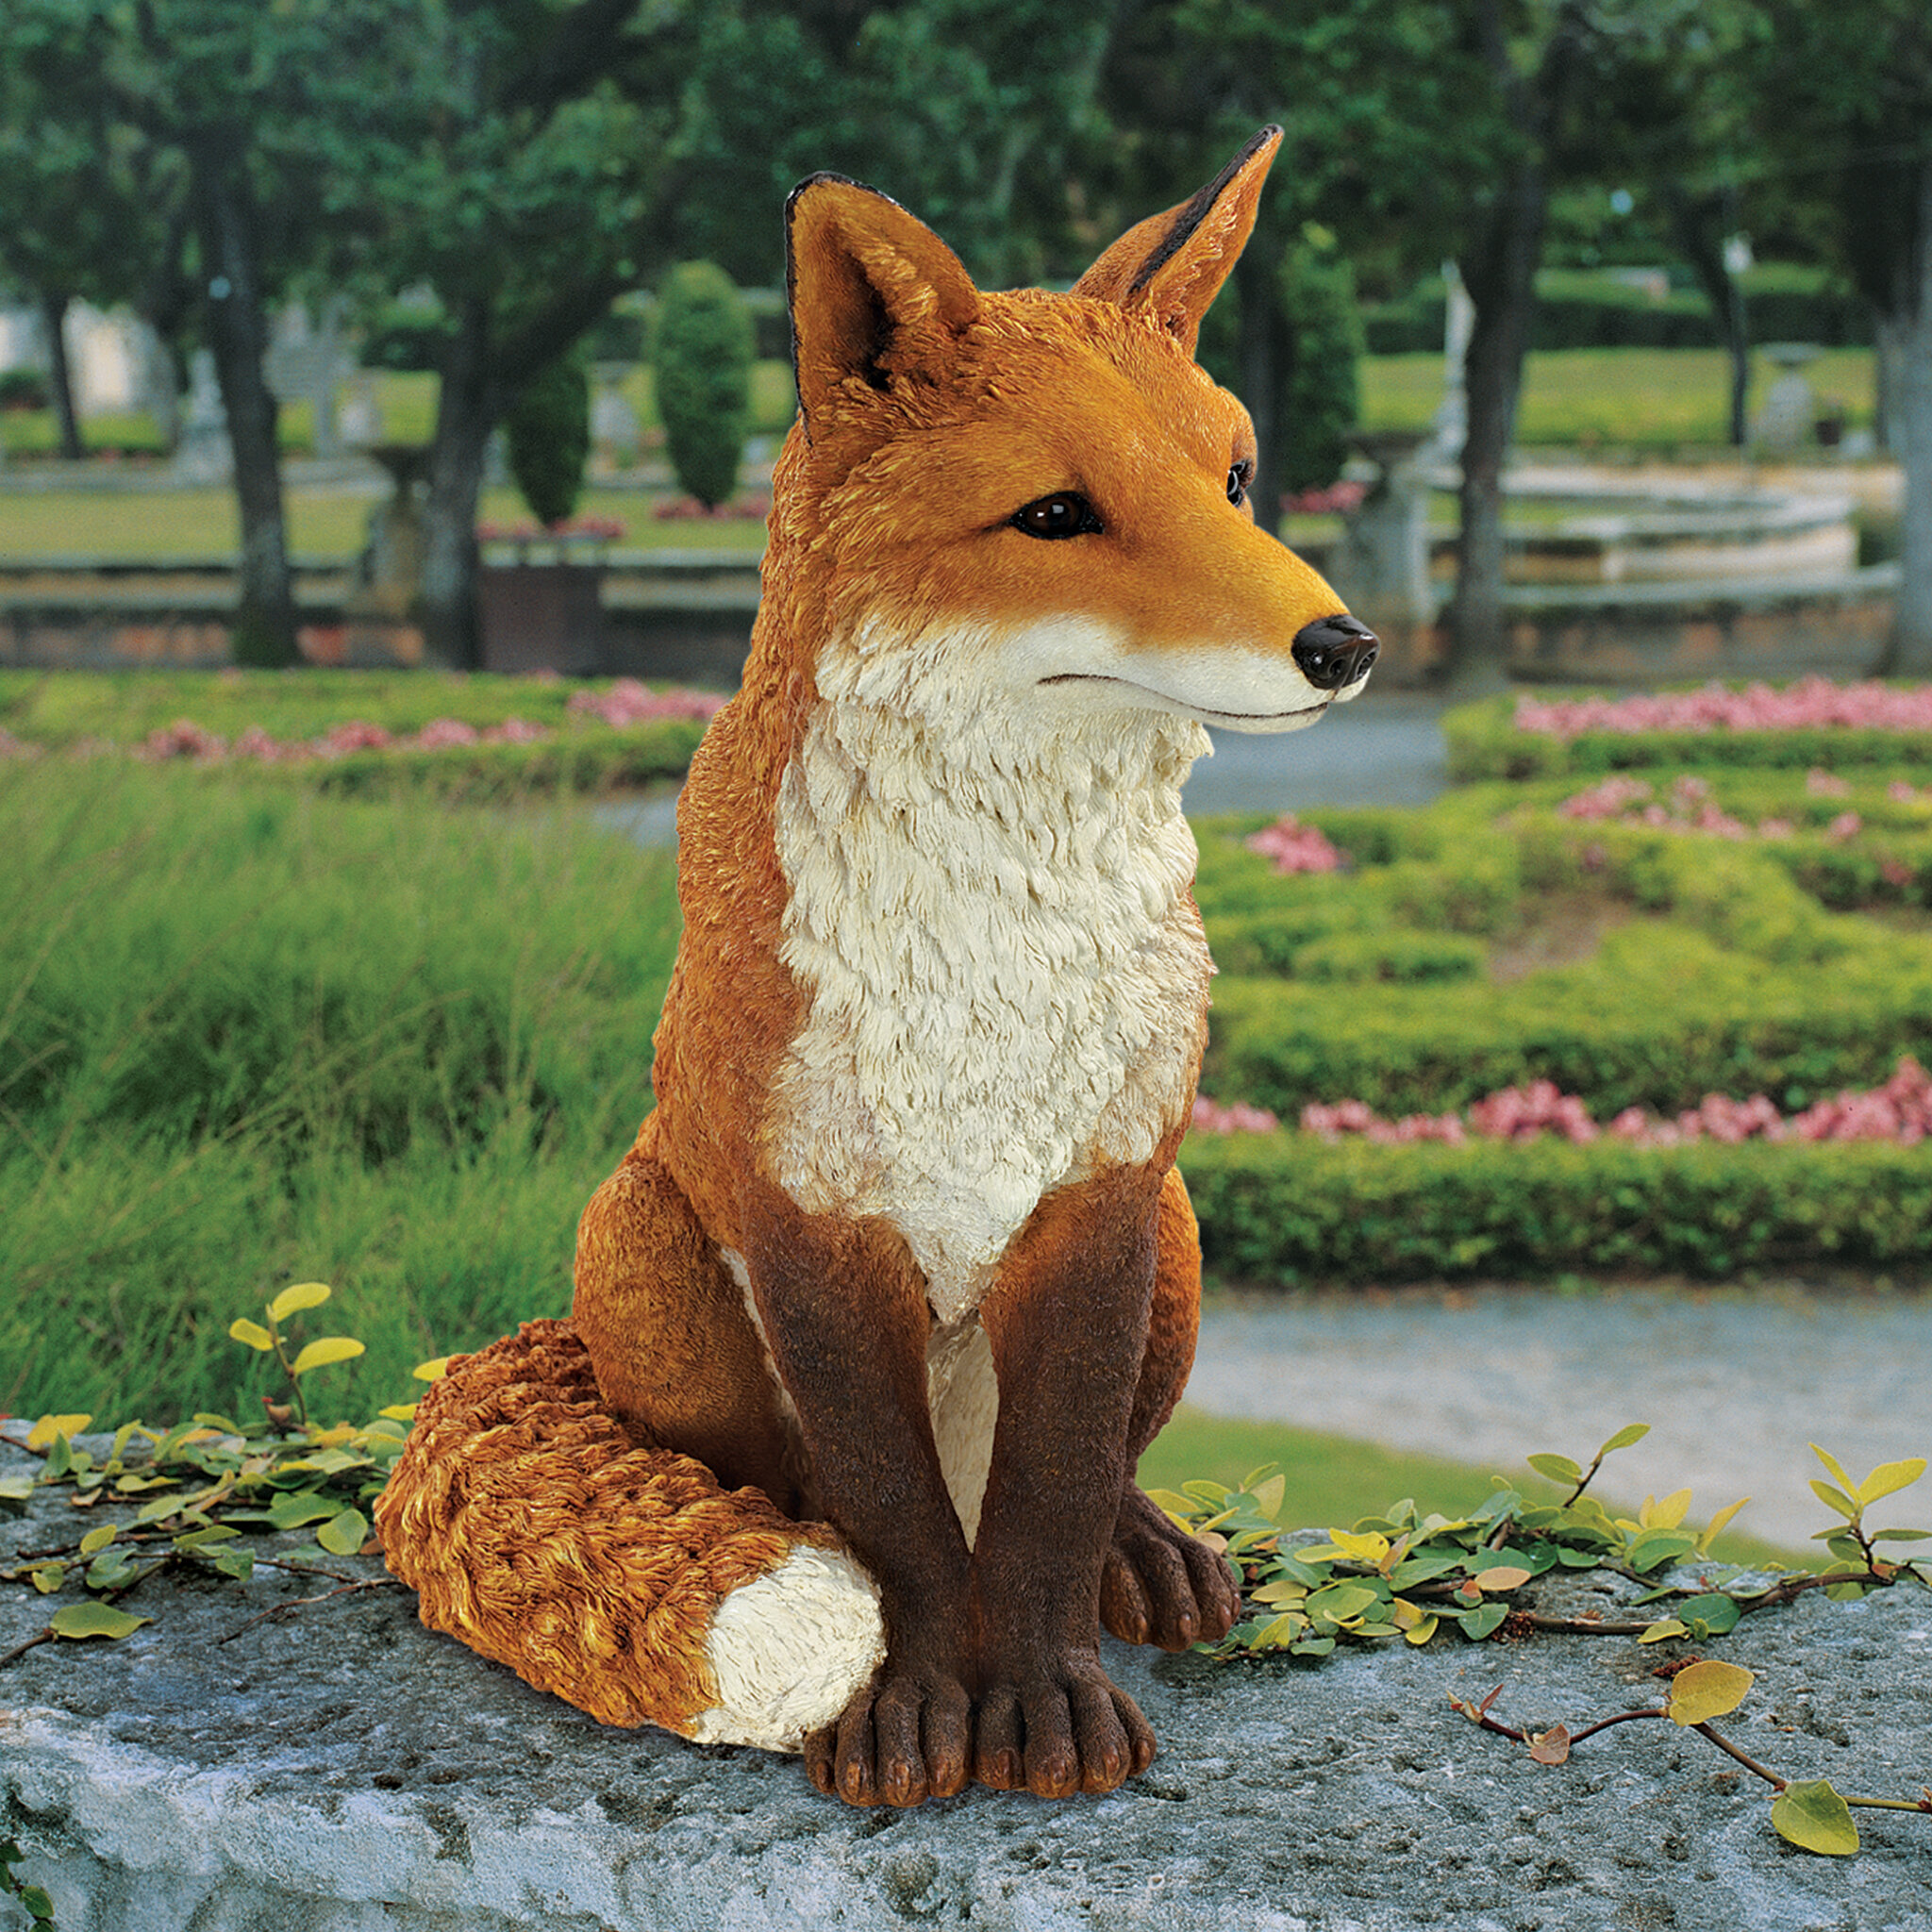 Garden New FOX Sleeping Figurine Life Like Statue Decor Home 